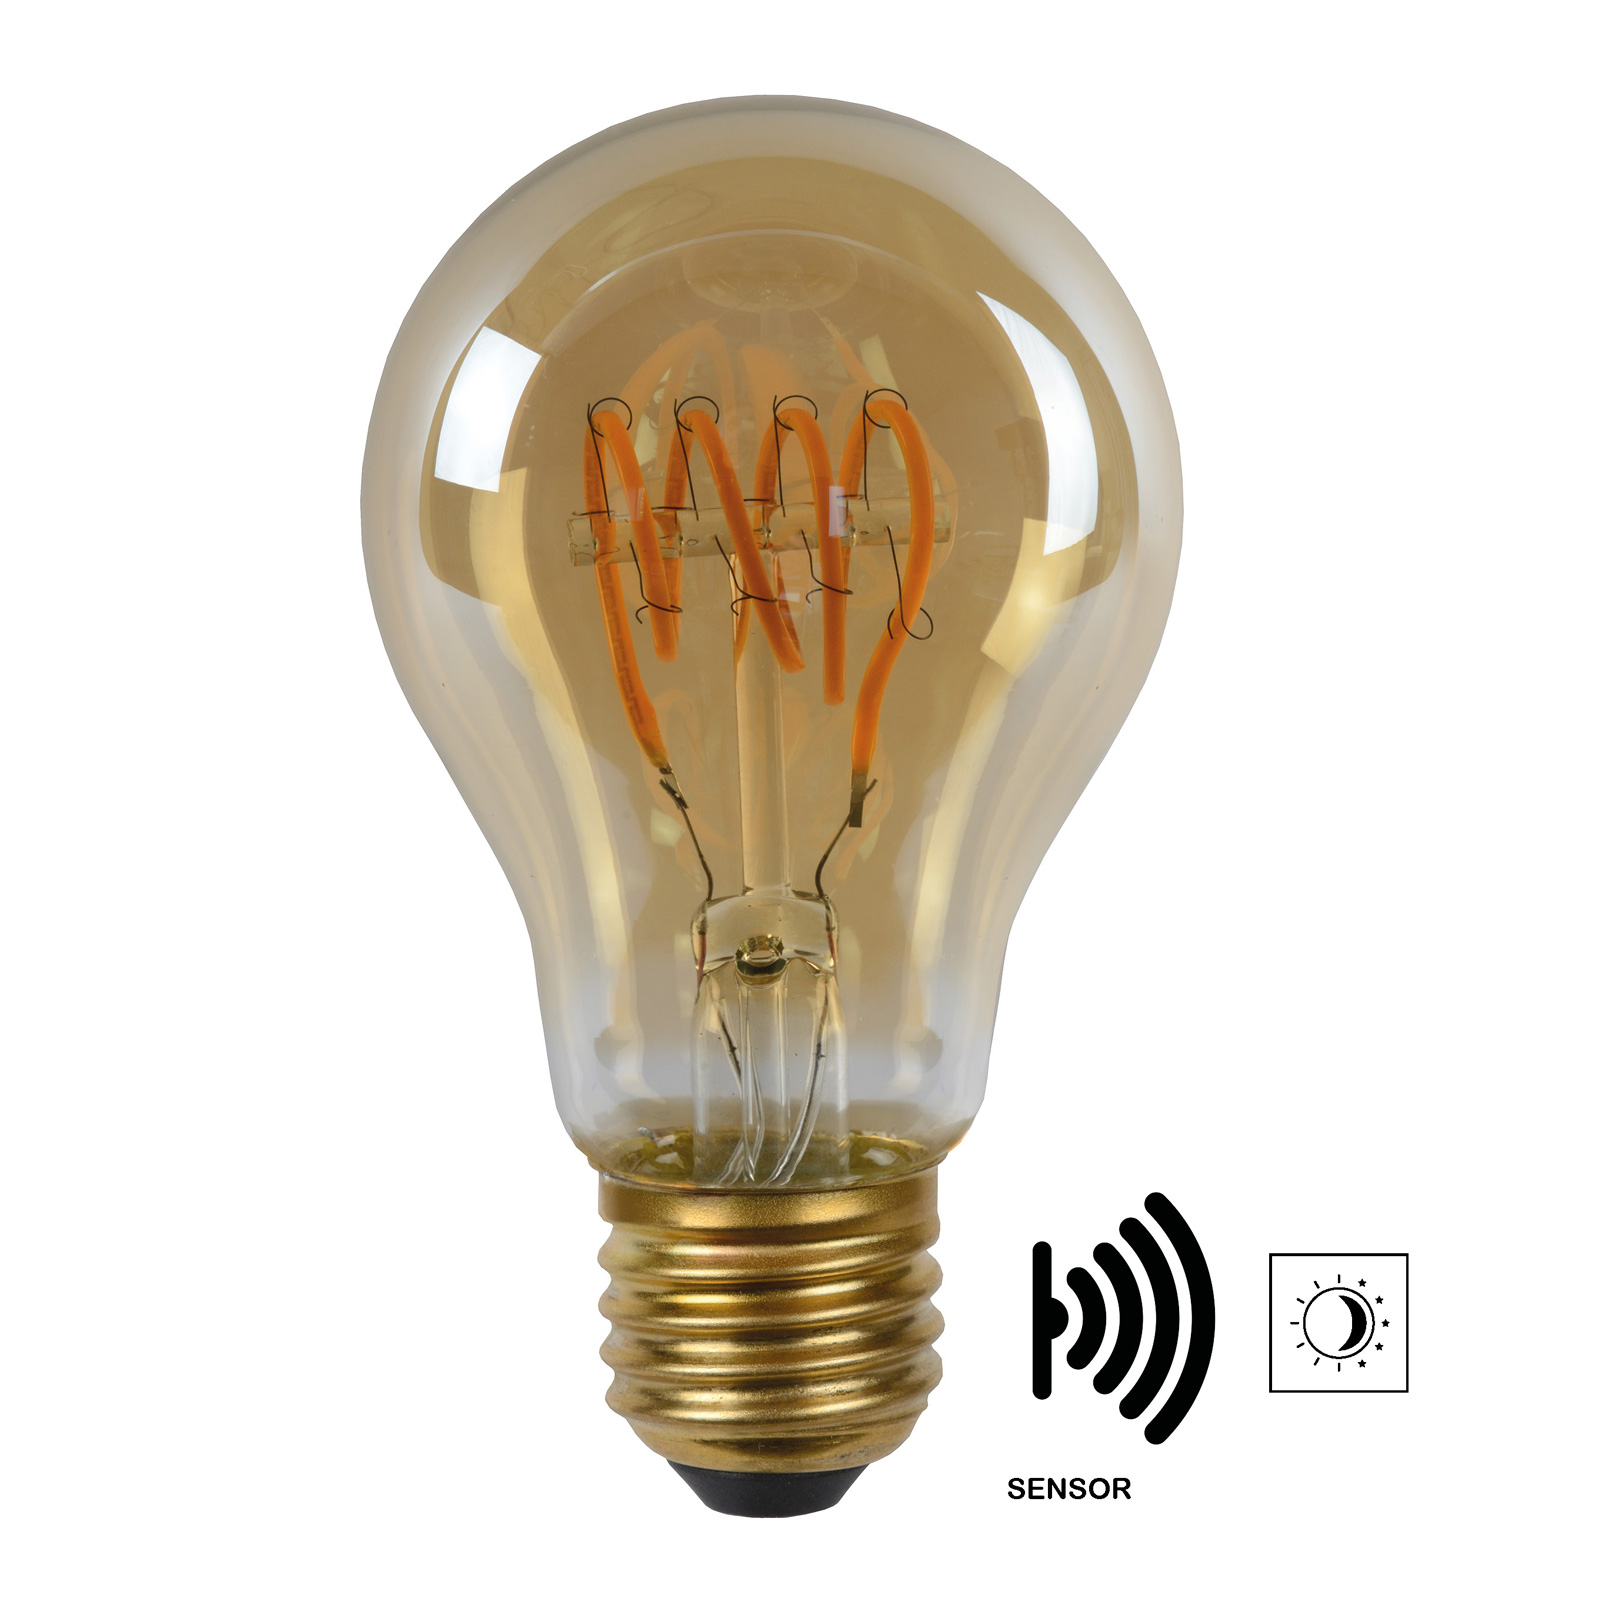 Plak opnieuw stok Het is goedkoop LED lamp E27 A60 4W 2.200K amber dag/nachtsensor | Lampen24.be